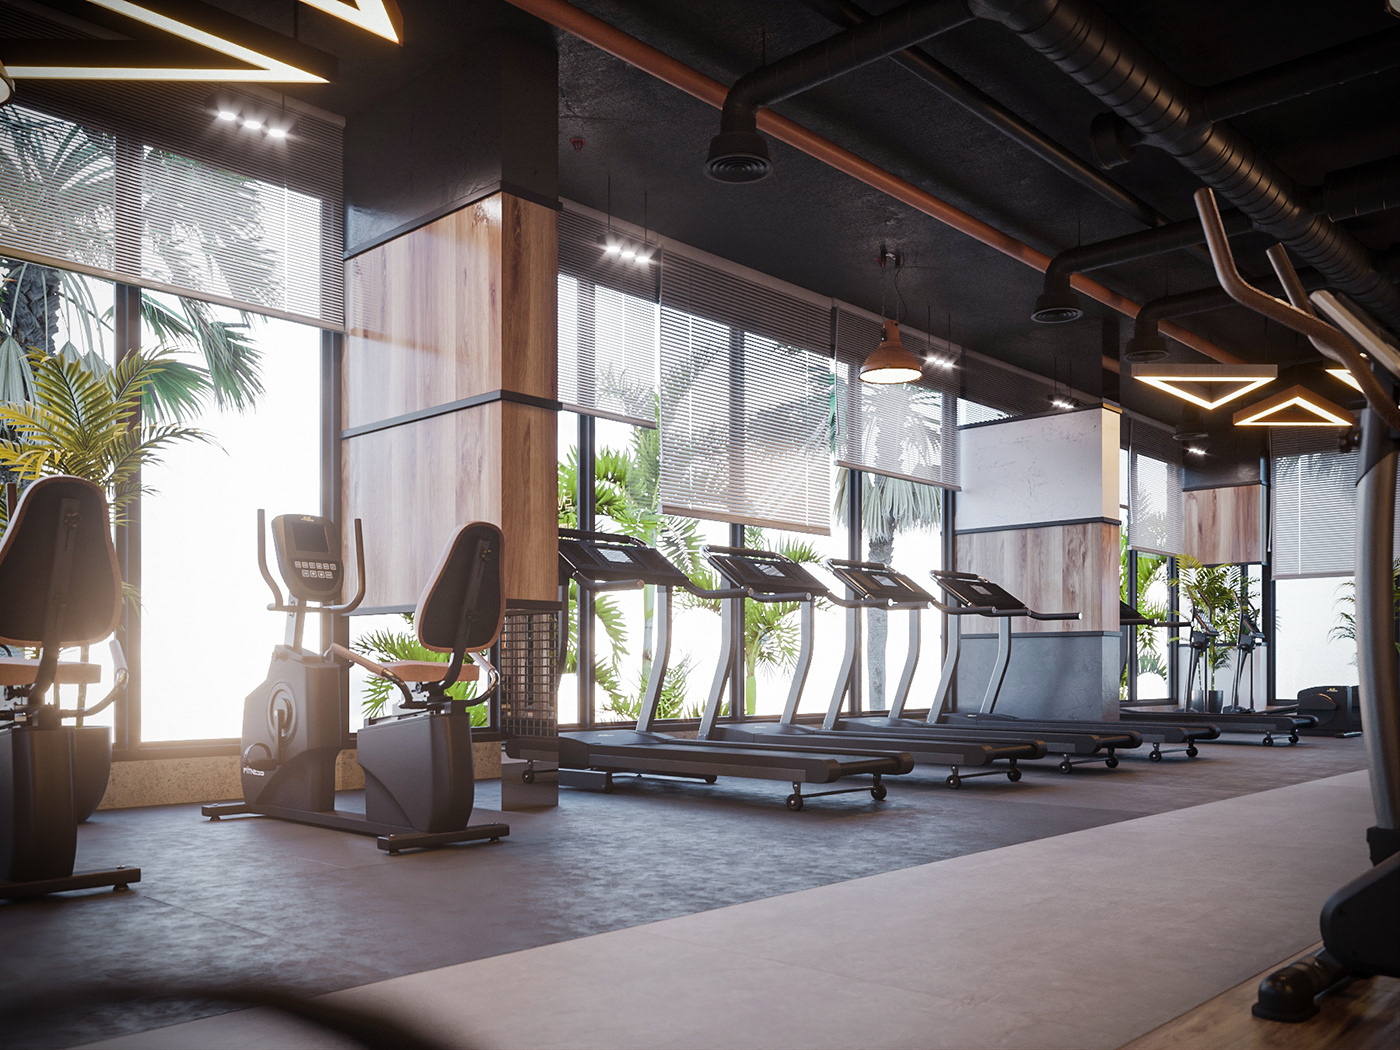 3dsmax corona coronarenderer gym Interior interiordesign orange Render visual